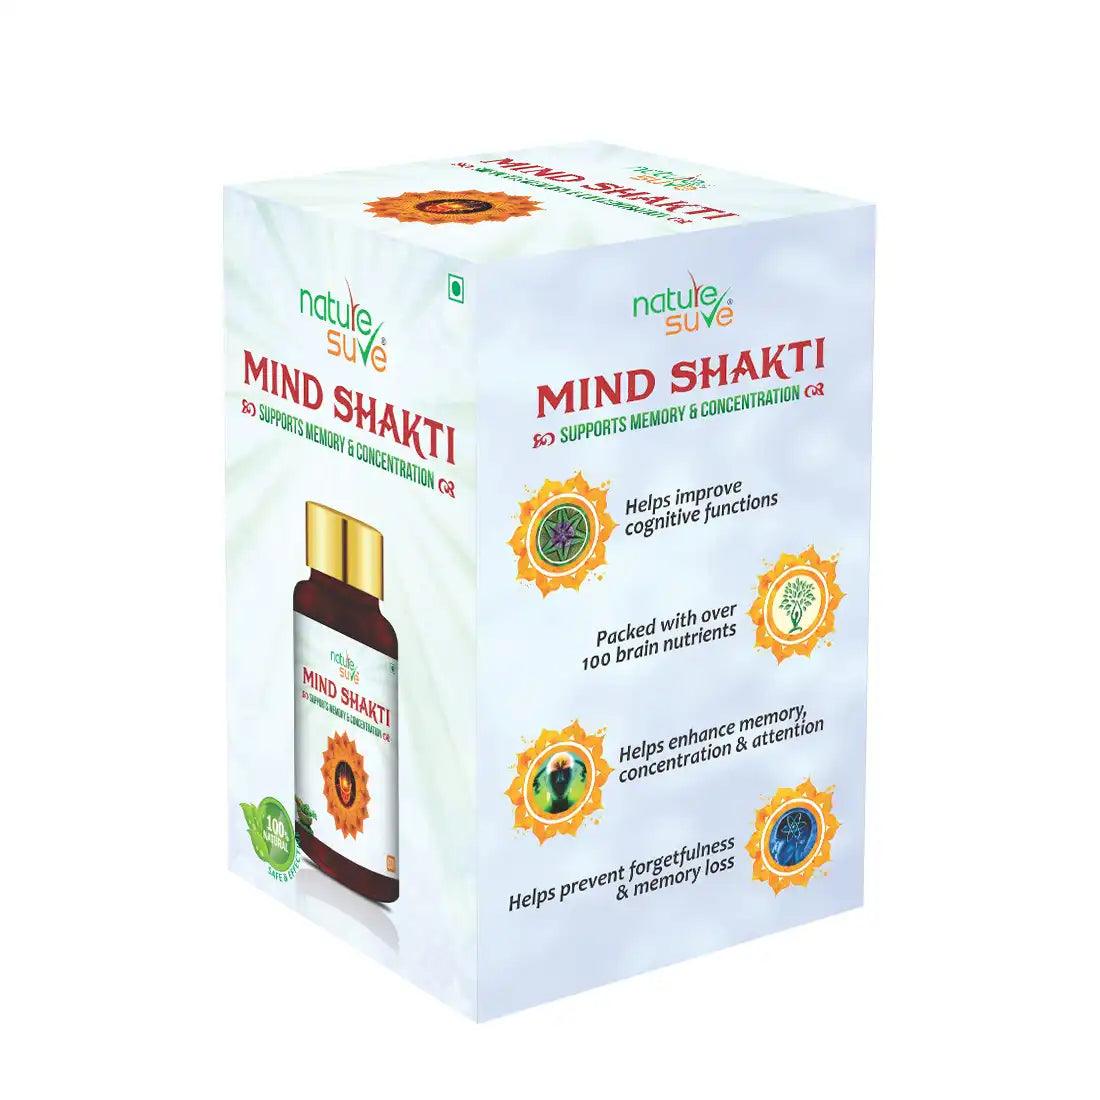 Nature Sure Mind Shakti Tablets help enhance memory and concentration - everteen-neud.com